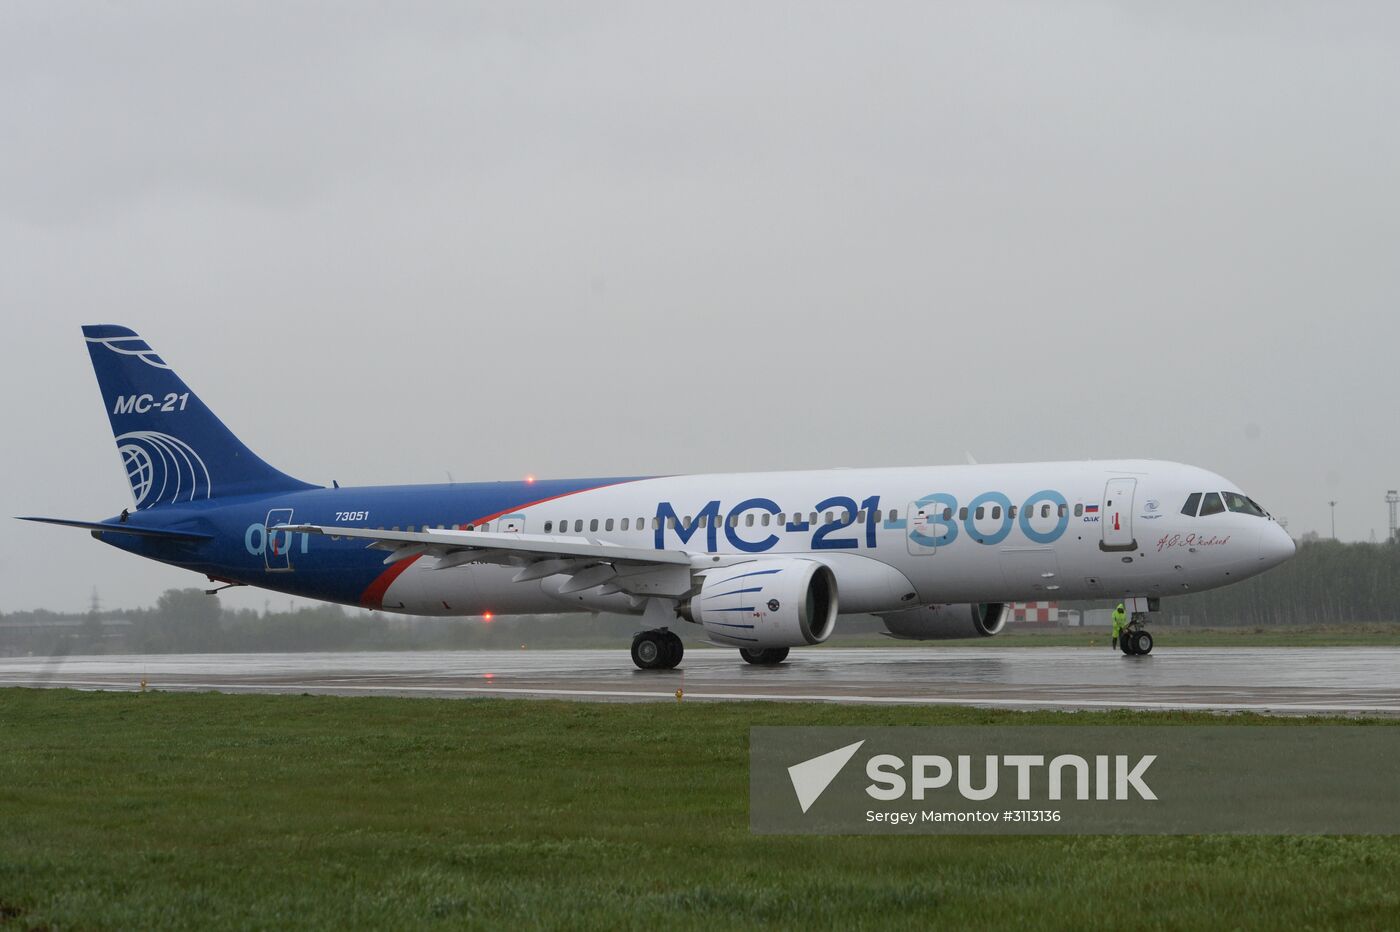 Russian MS-21 passenger jet makes maiden flight